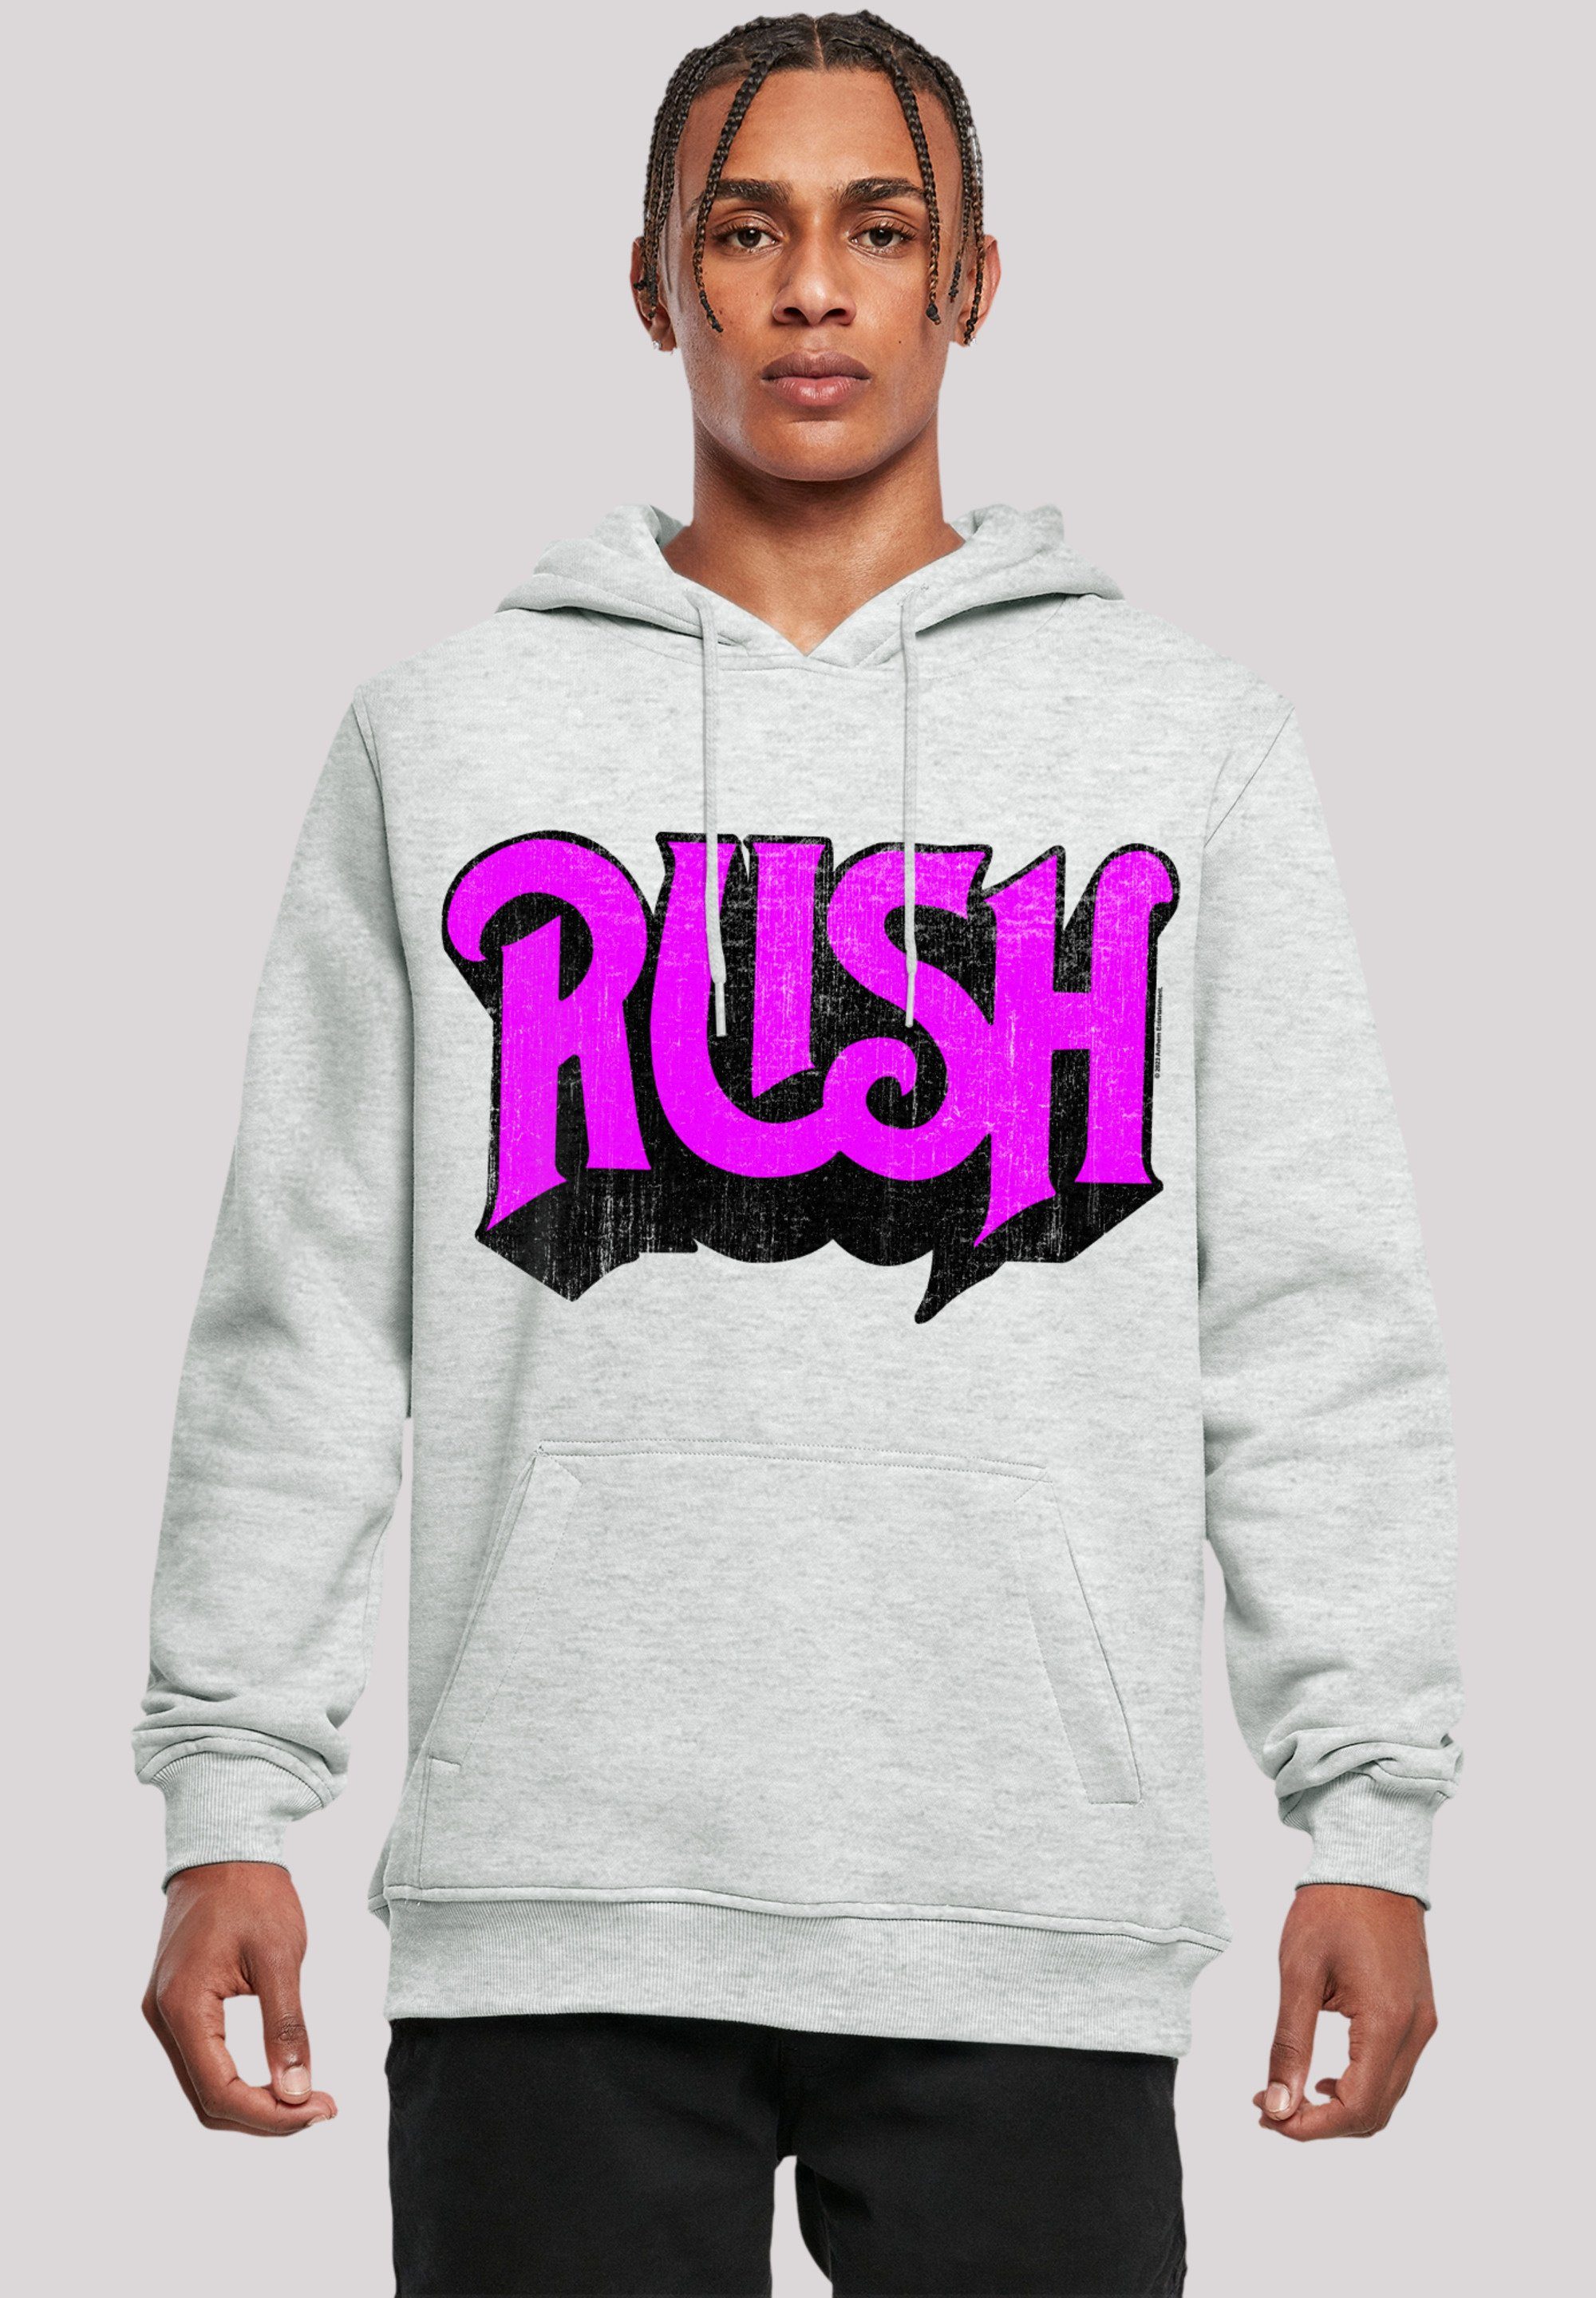 Rush Rock F4NT4STIC Kapuzenpullover Band geräumige Logo Kapuze Premium Qualität, Verstellbare Kängurutasche und Distressed